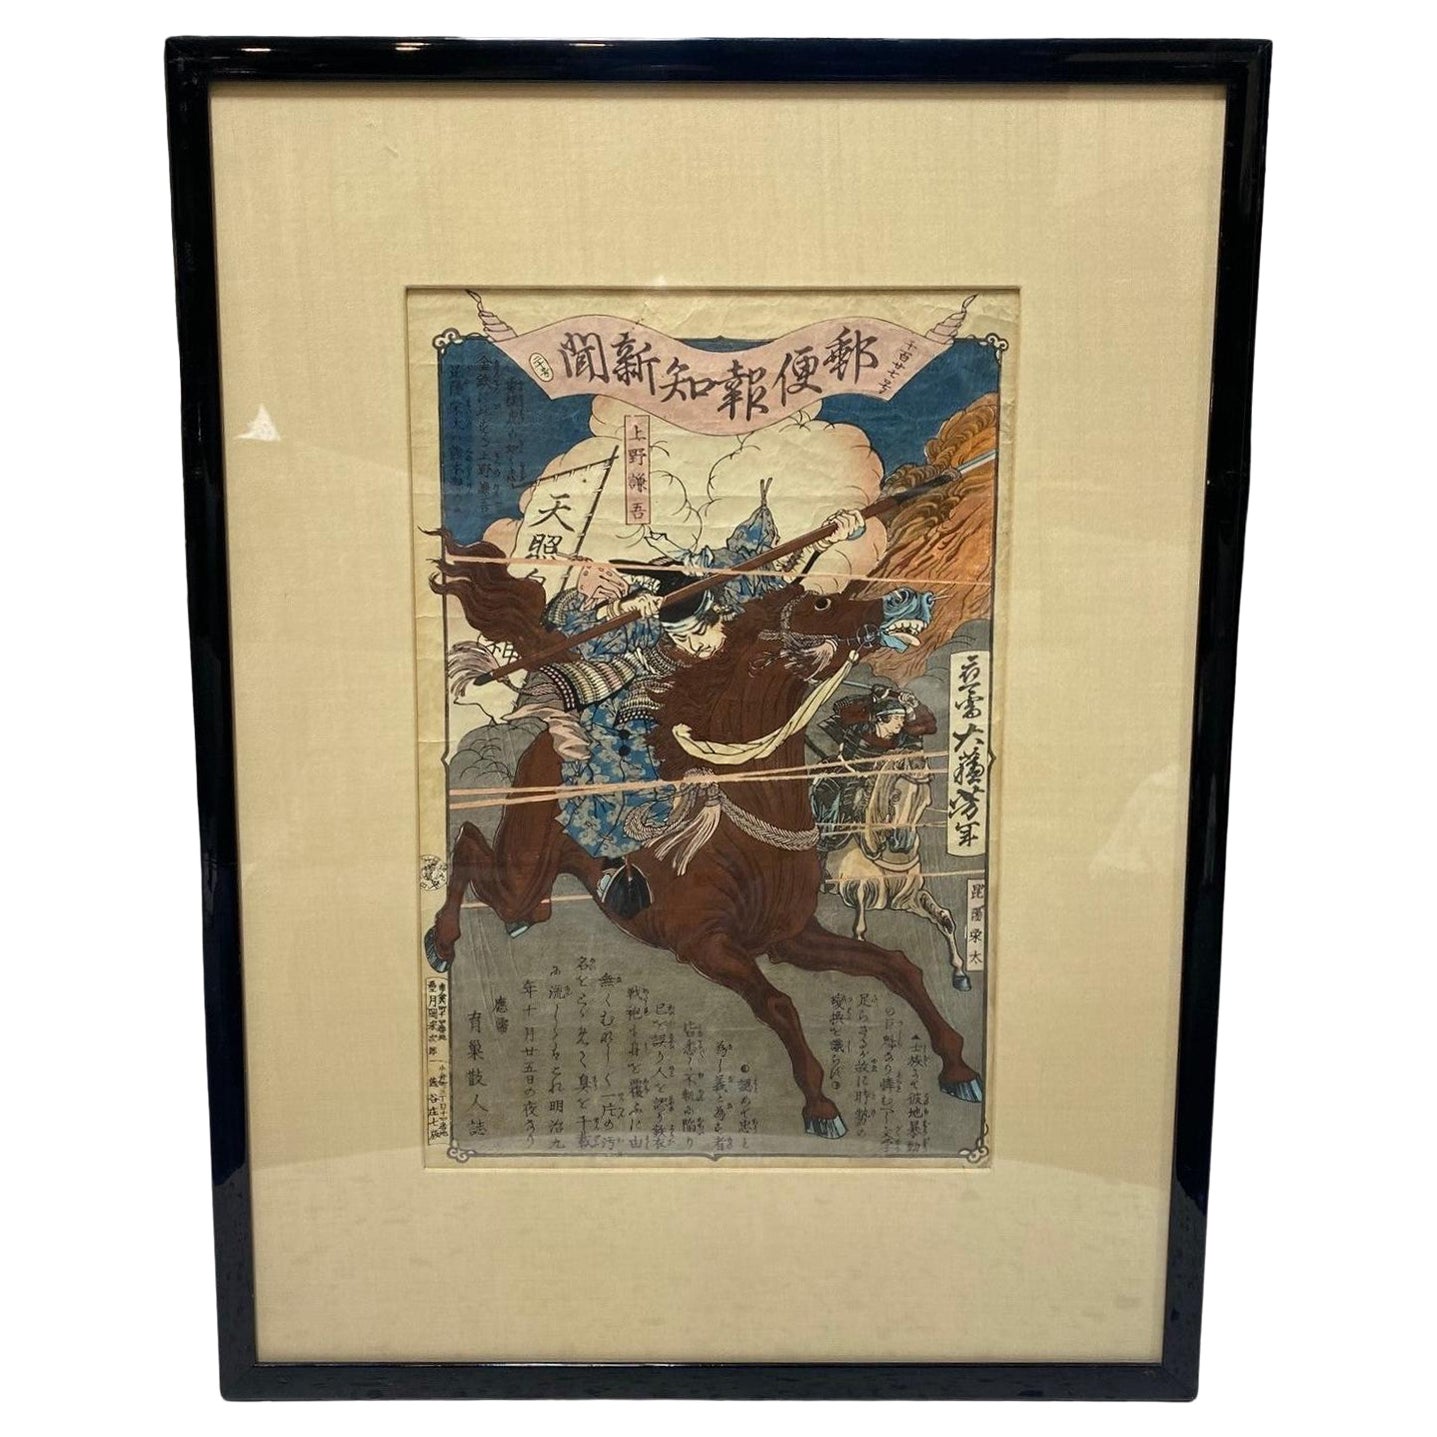 Tsukioka Yoshitoshi Signed Japanese Woodblock Print Samurai Warrors on Horseback (Gravure sur bois japonaise signée par Yoshitoshi Tsukioka Yoshitoshi)